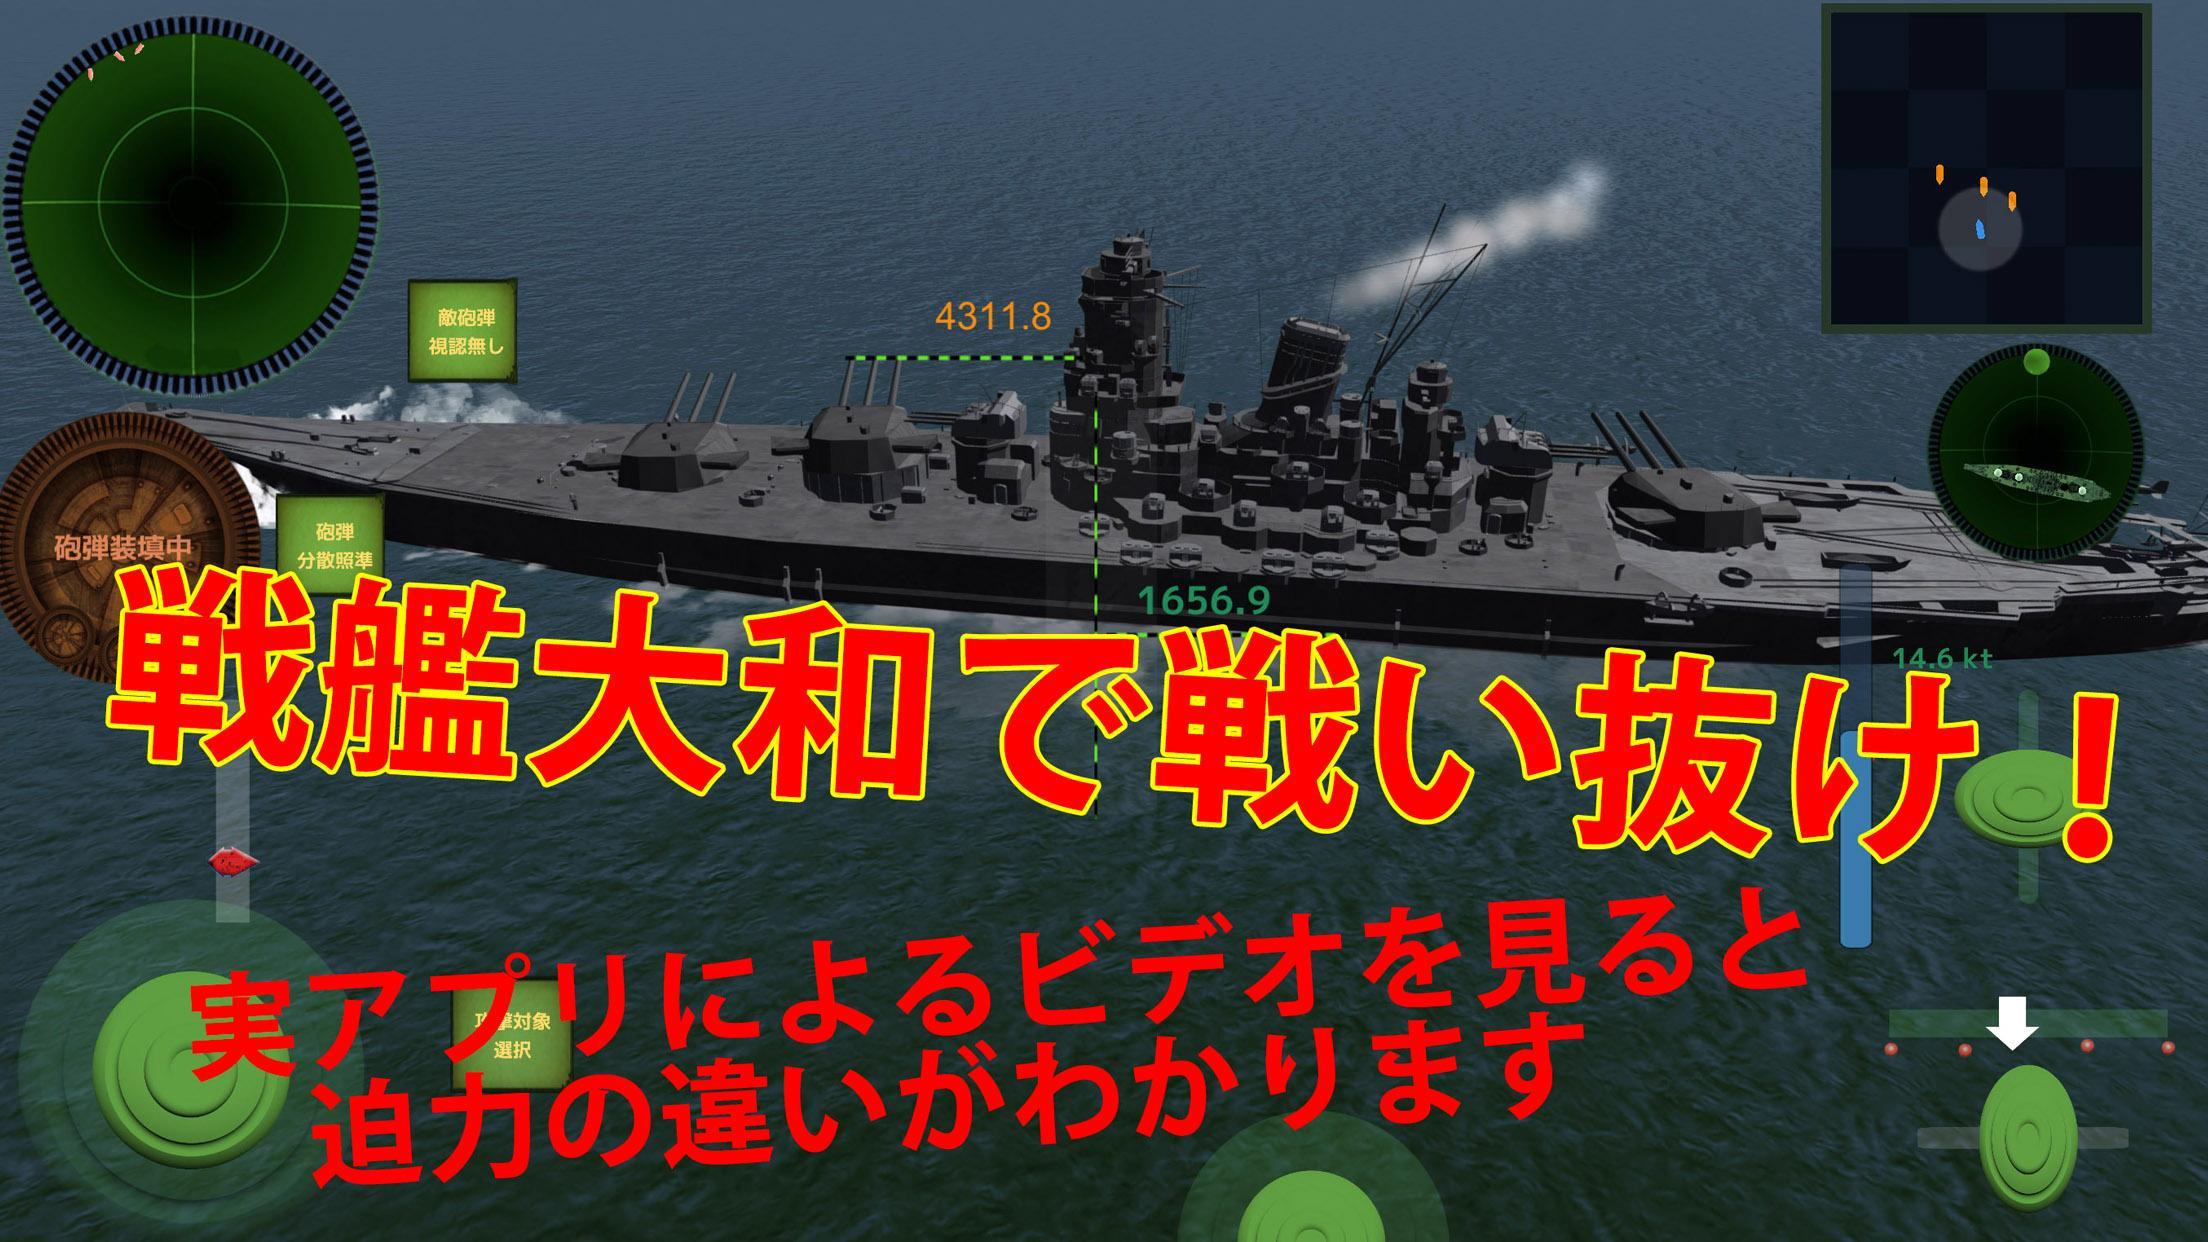 Screenshot 1 of Battleship-Ace Battle - ทำลายล้าง 